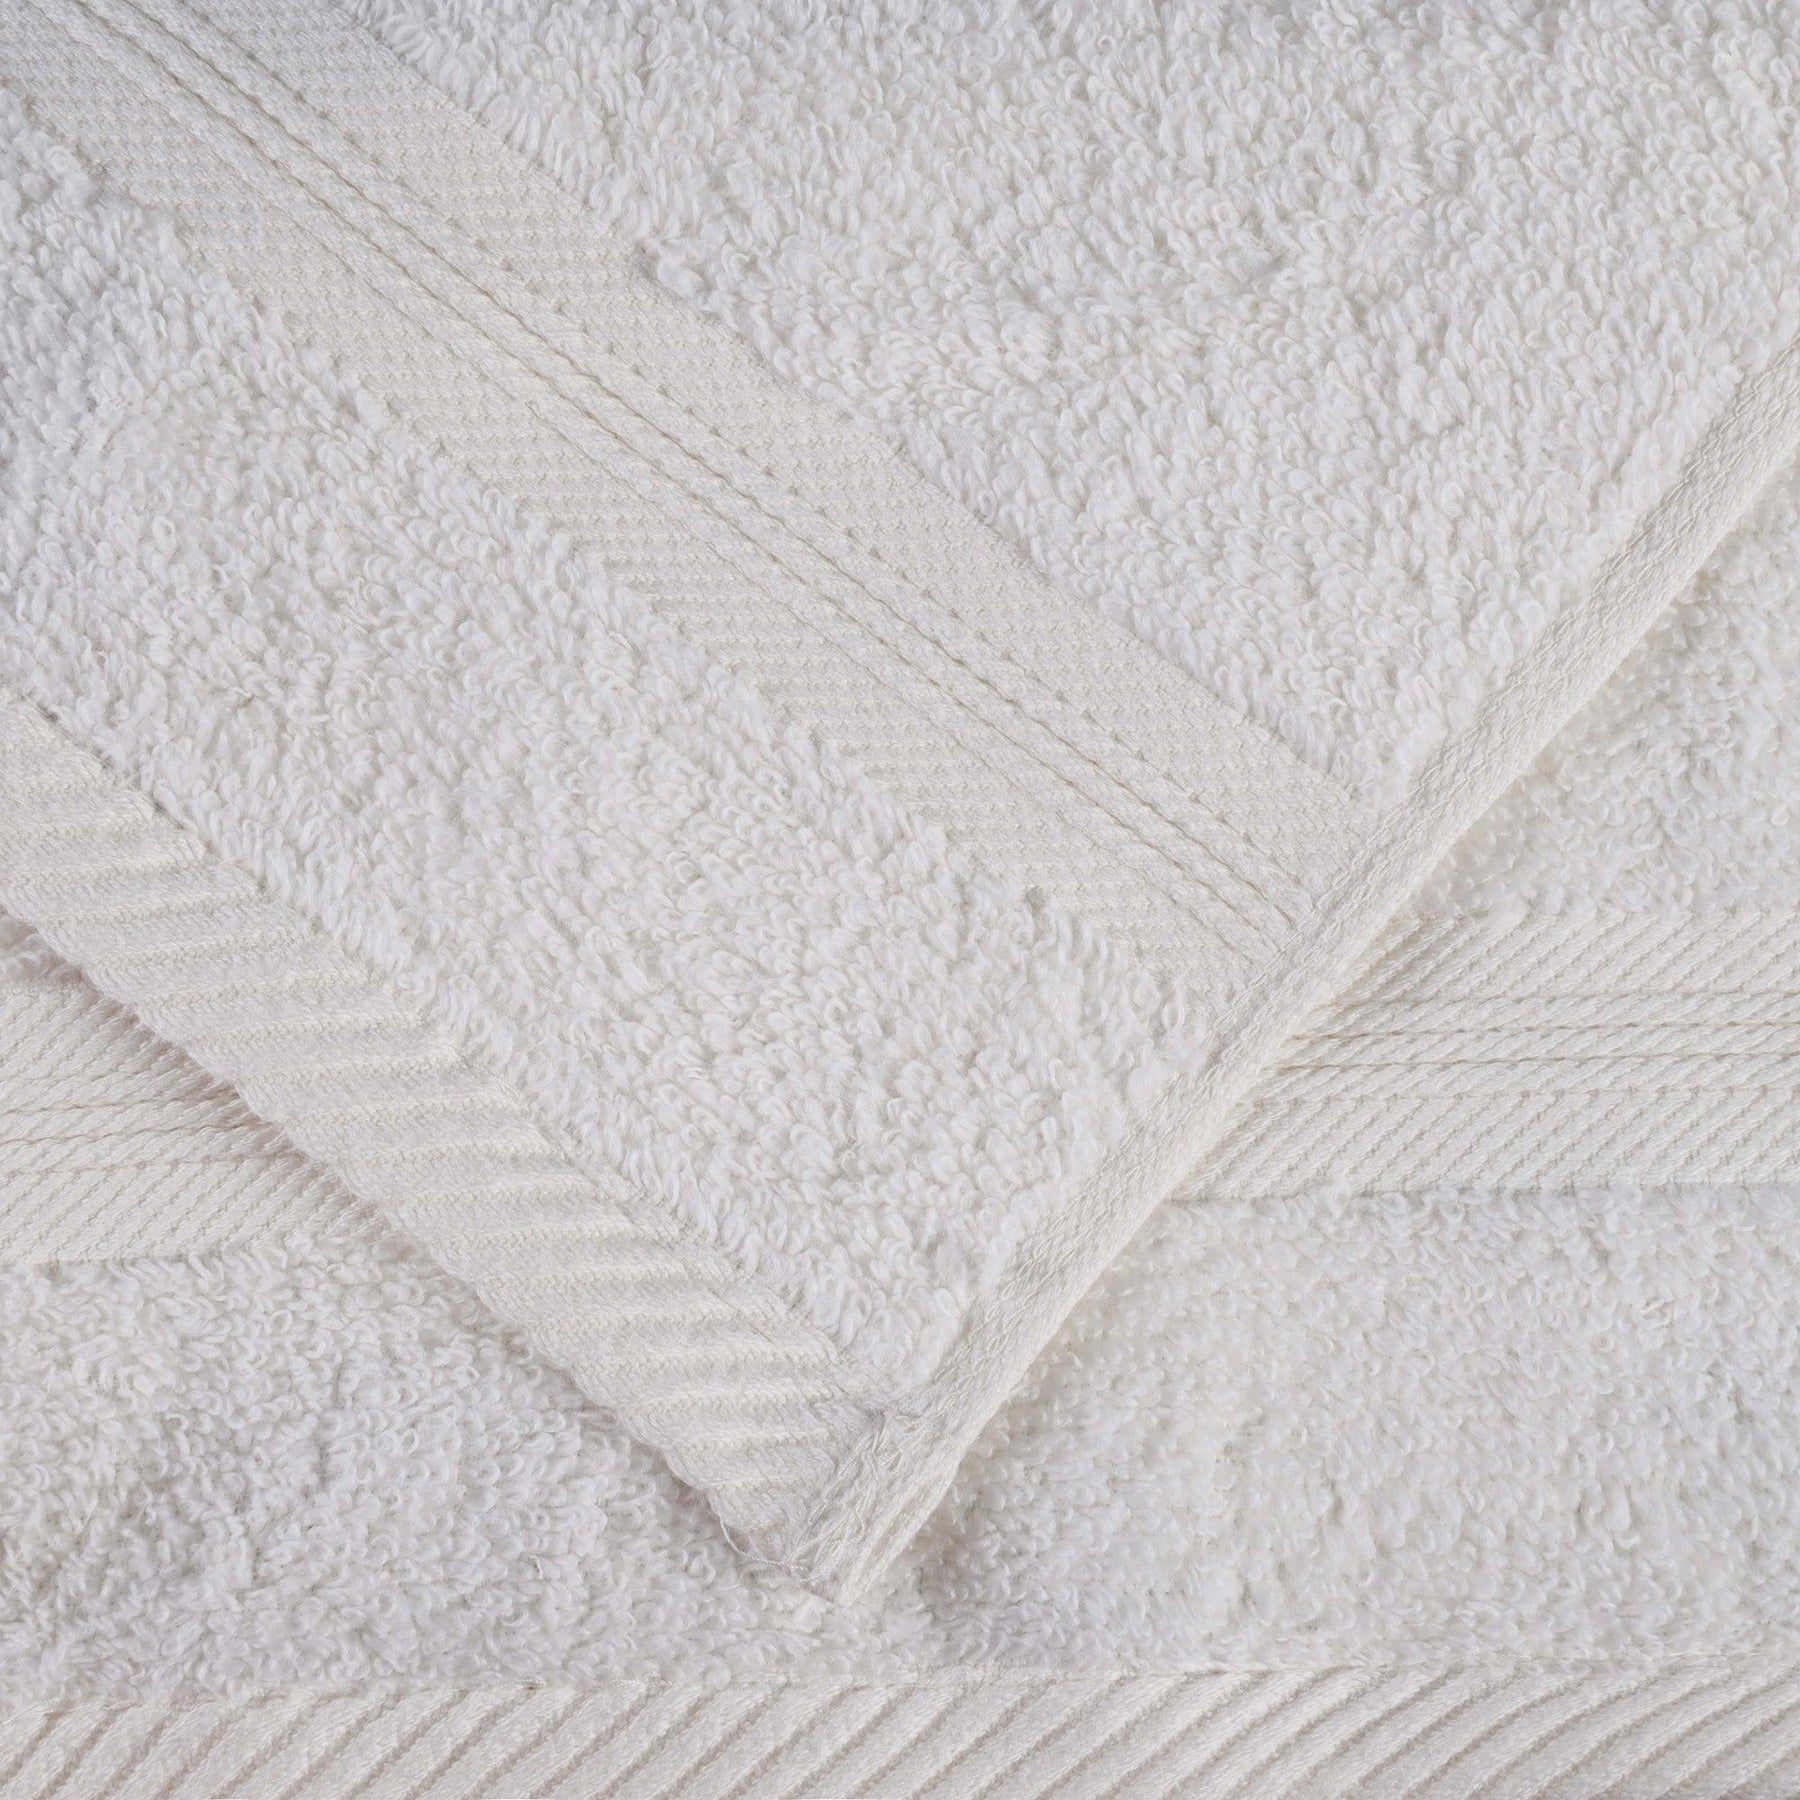  Superior Smart Dry Zero Twist Cotton 6-Piece Hand Towel Set - Ivory